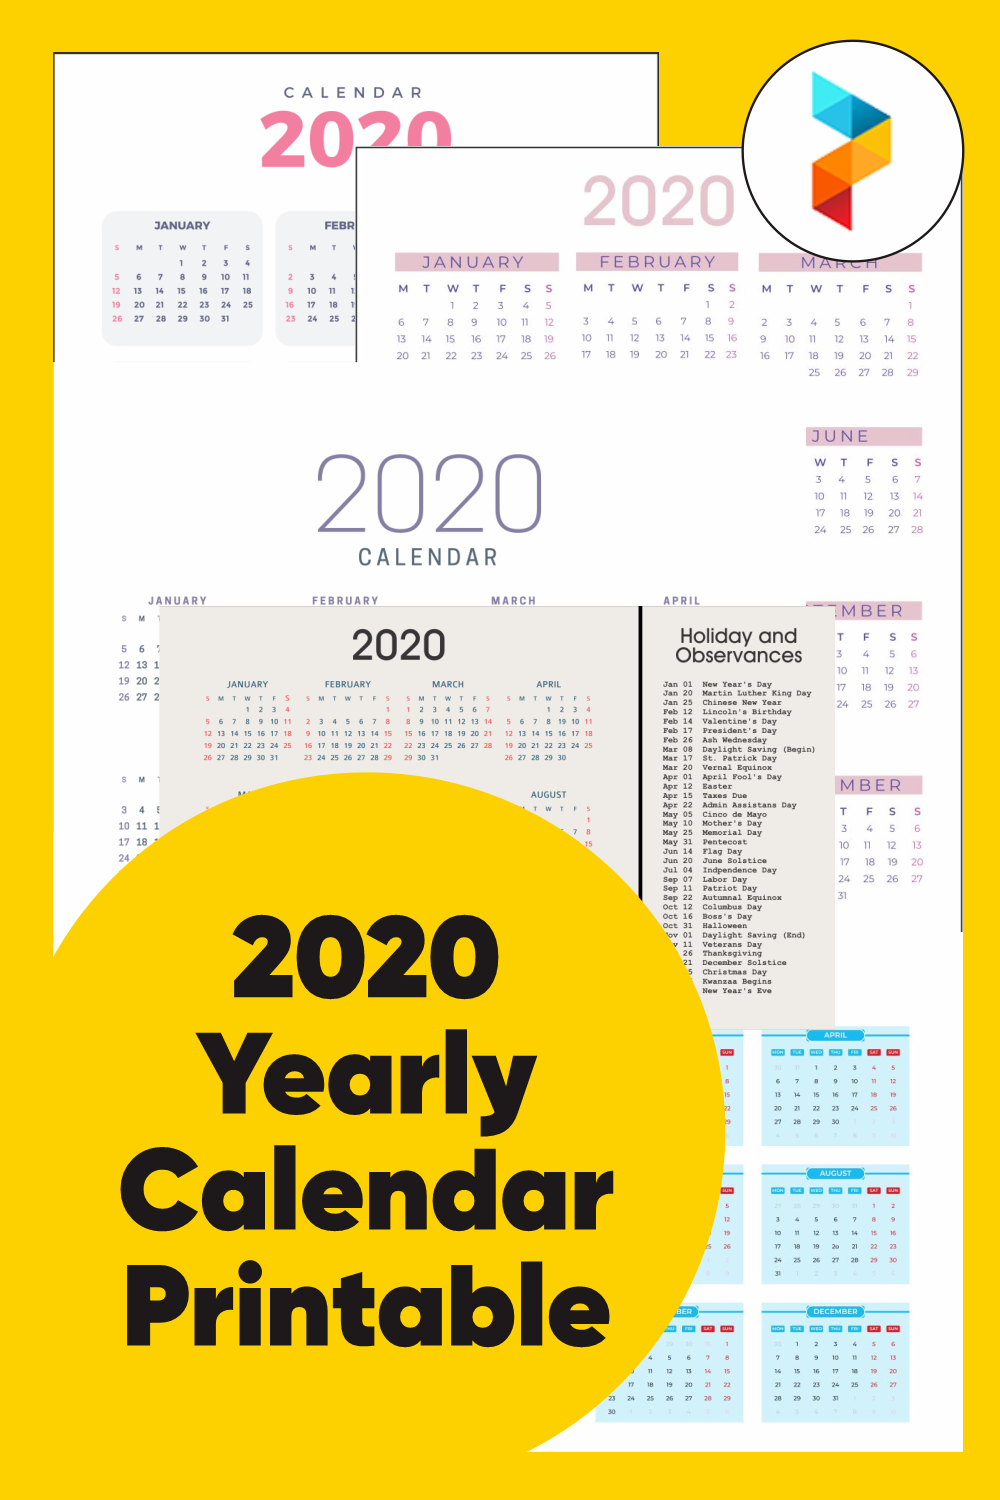 2020 Yearly Calendar Printable